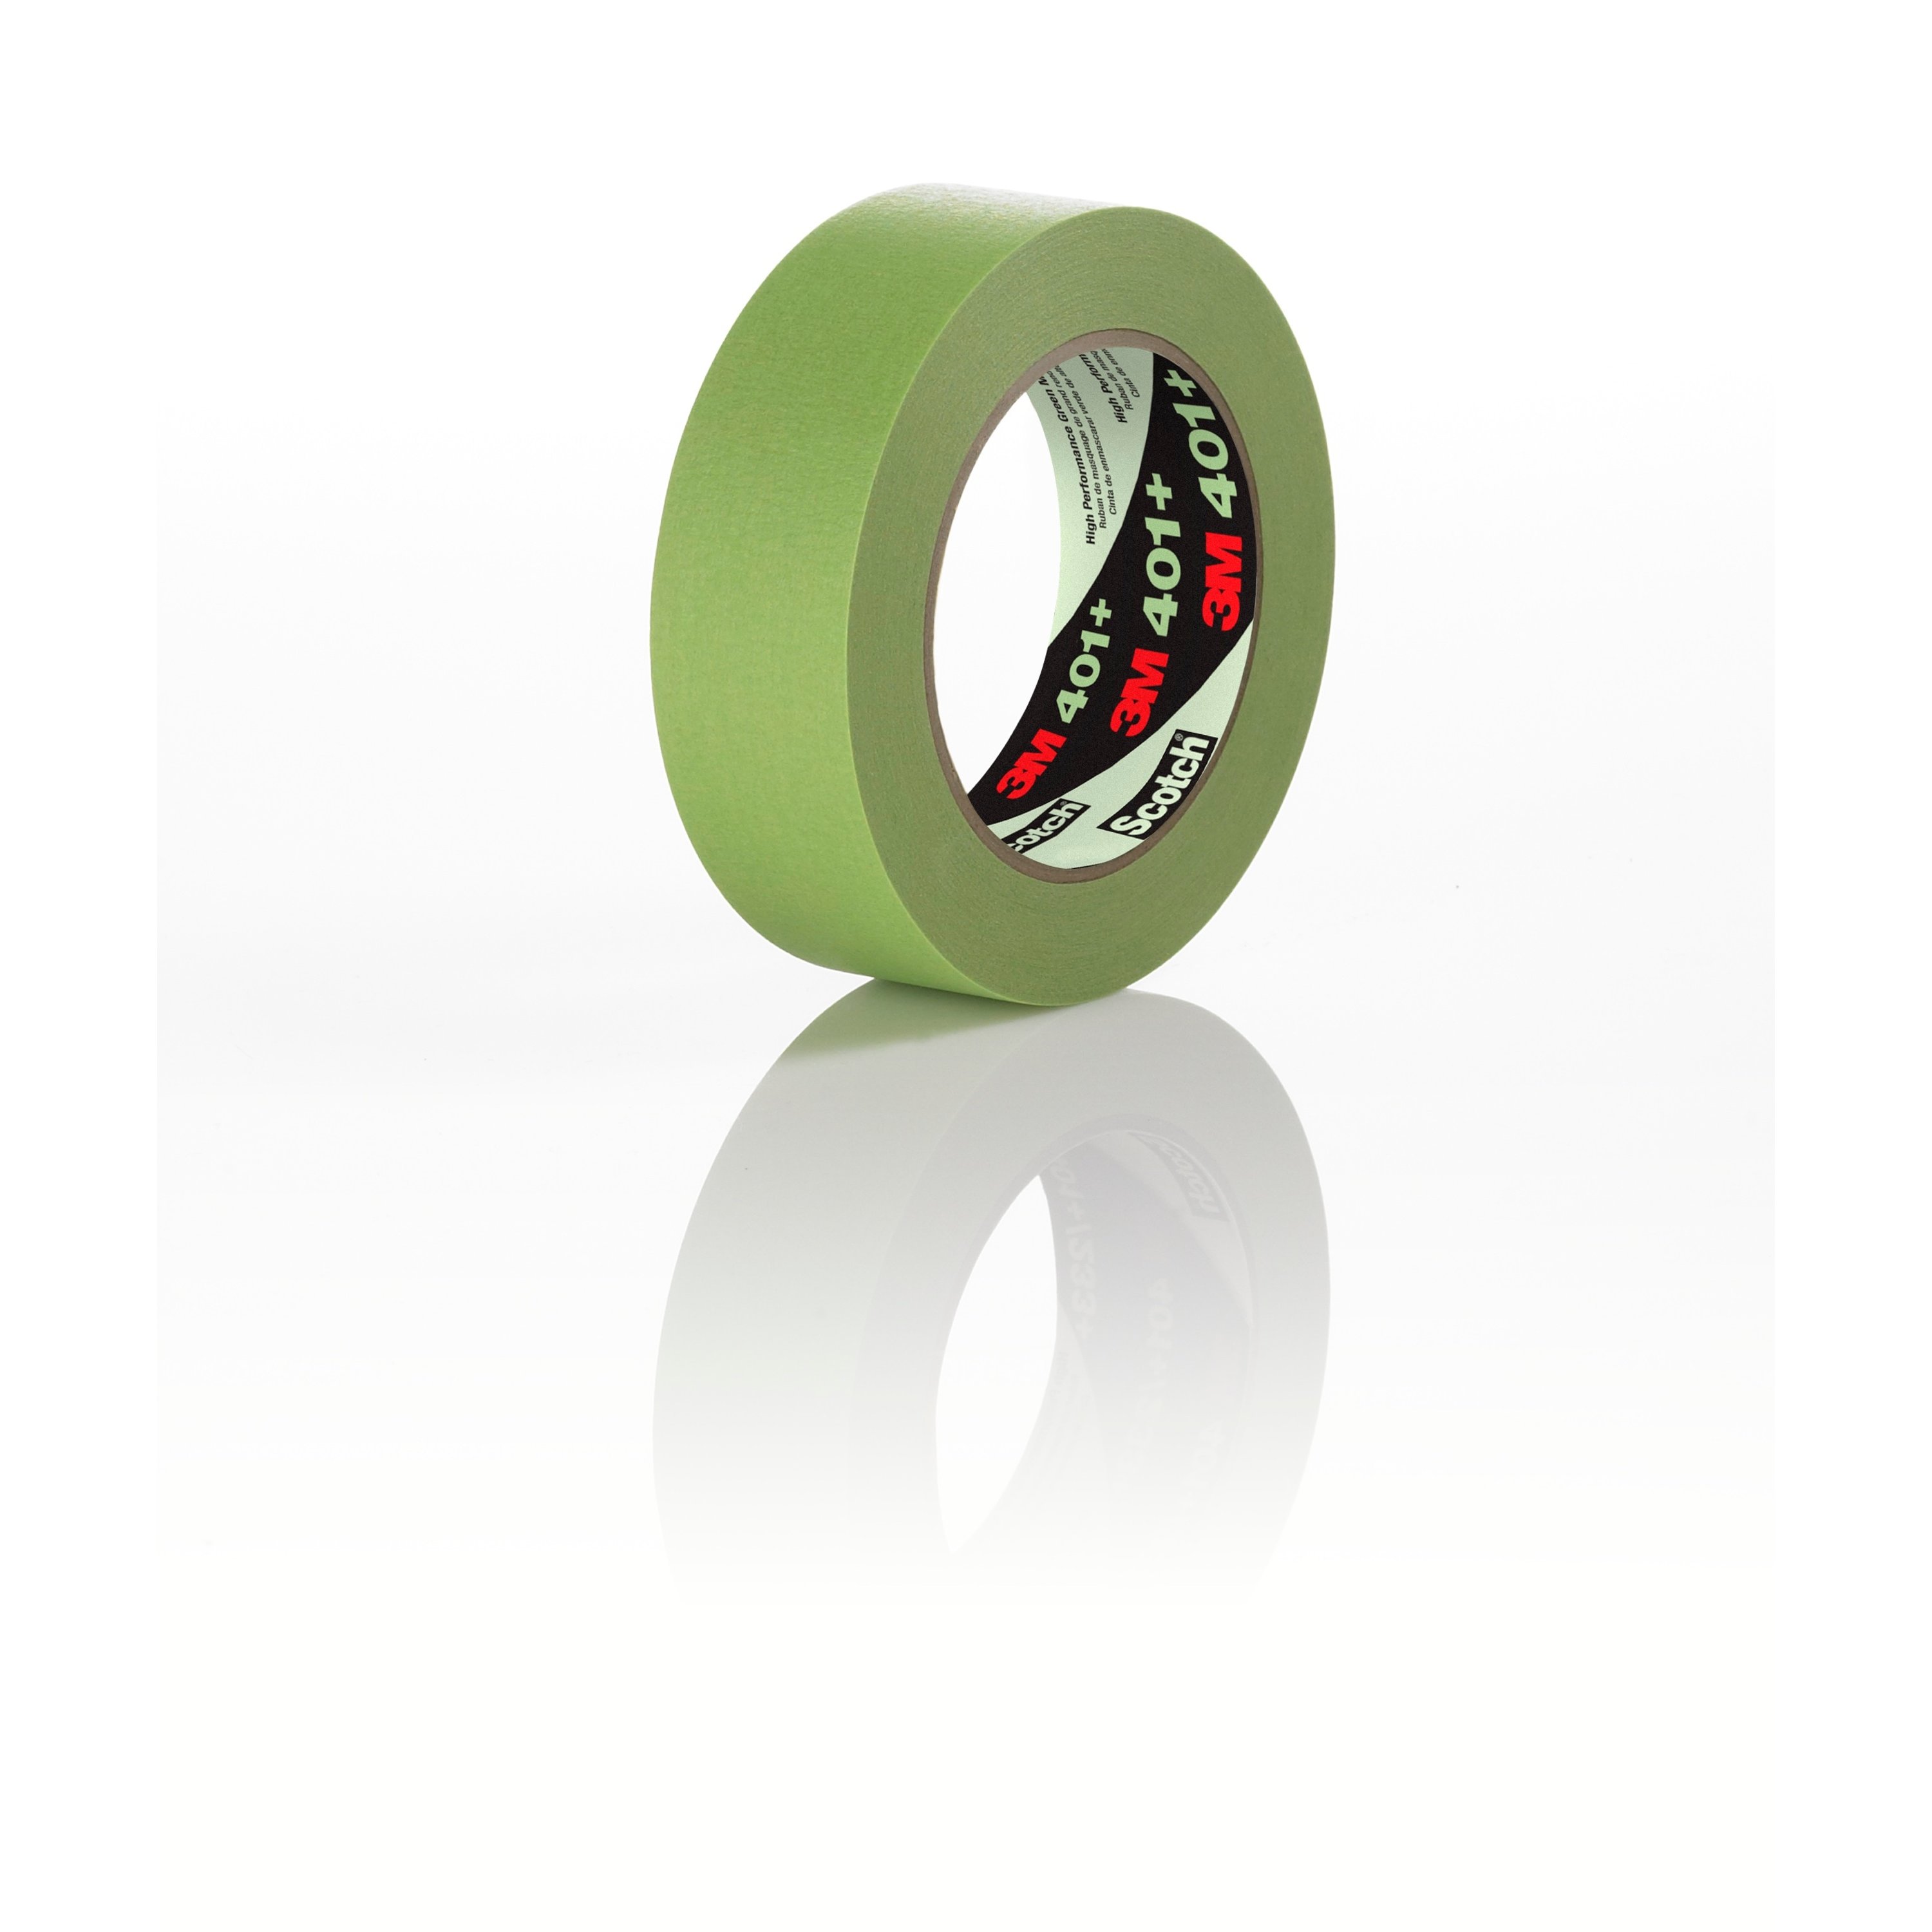 3M™ High Performance Green Masking Tape 401+, 48 mm x 55 m 6.7 mil, 12
per case Bulk